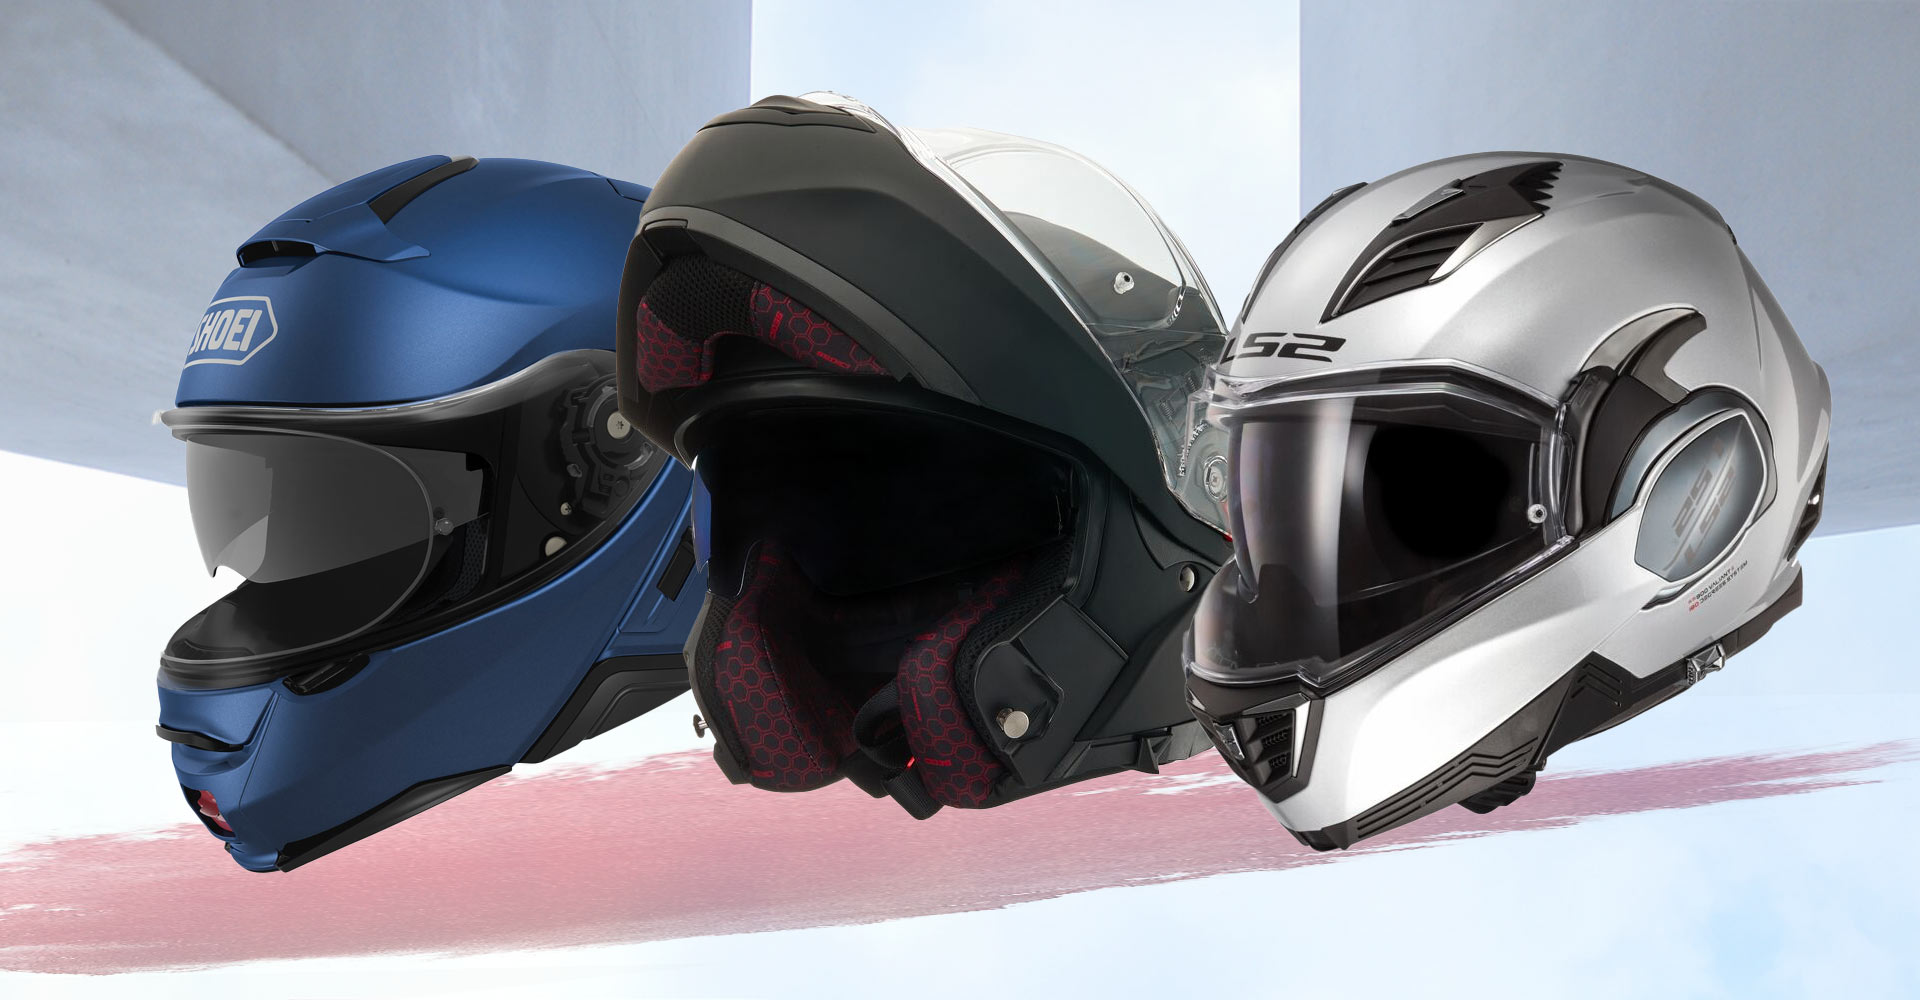 II. Advantages of Modular Helmets